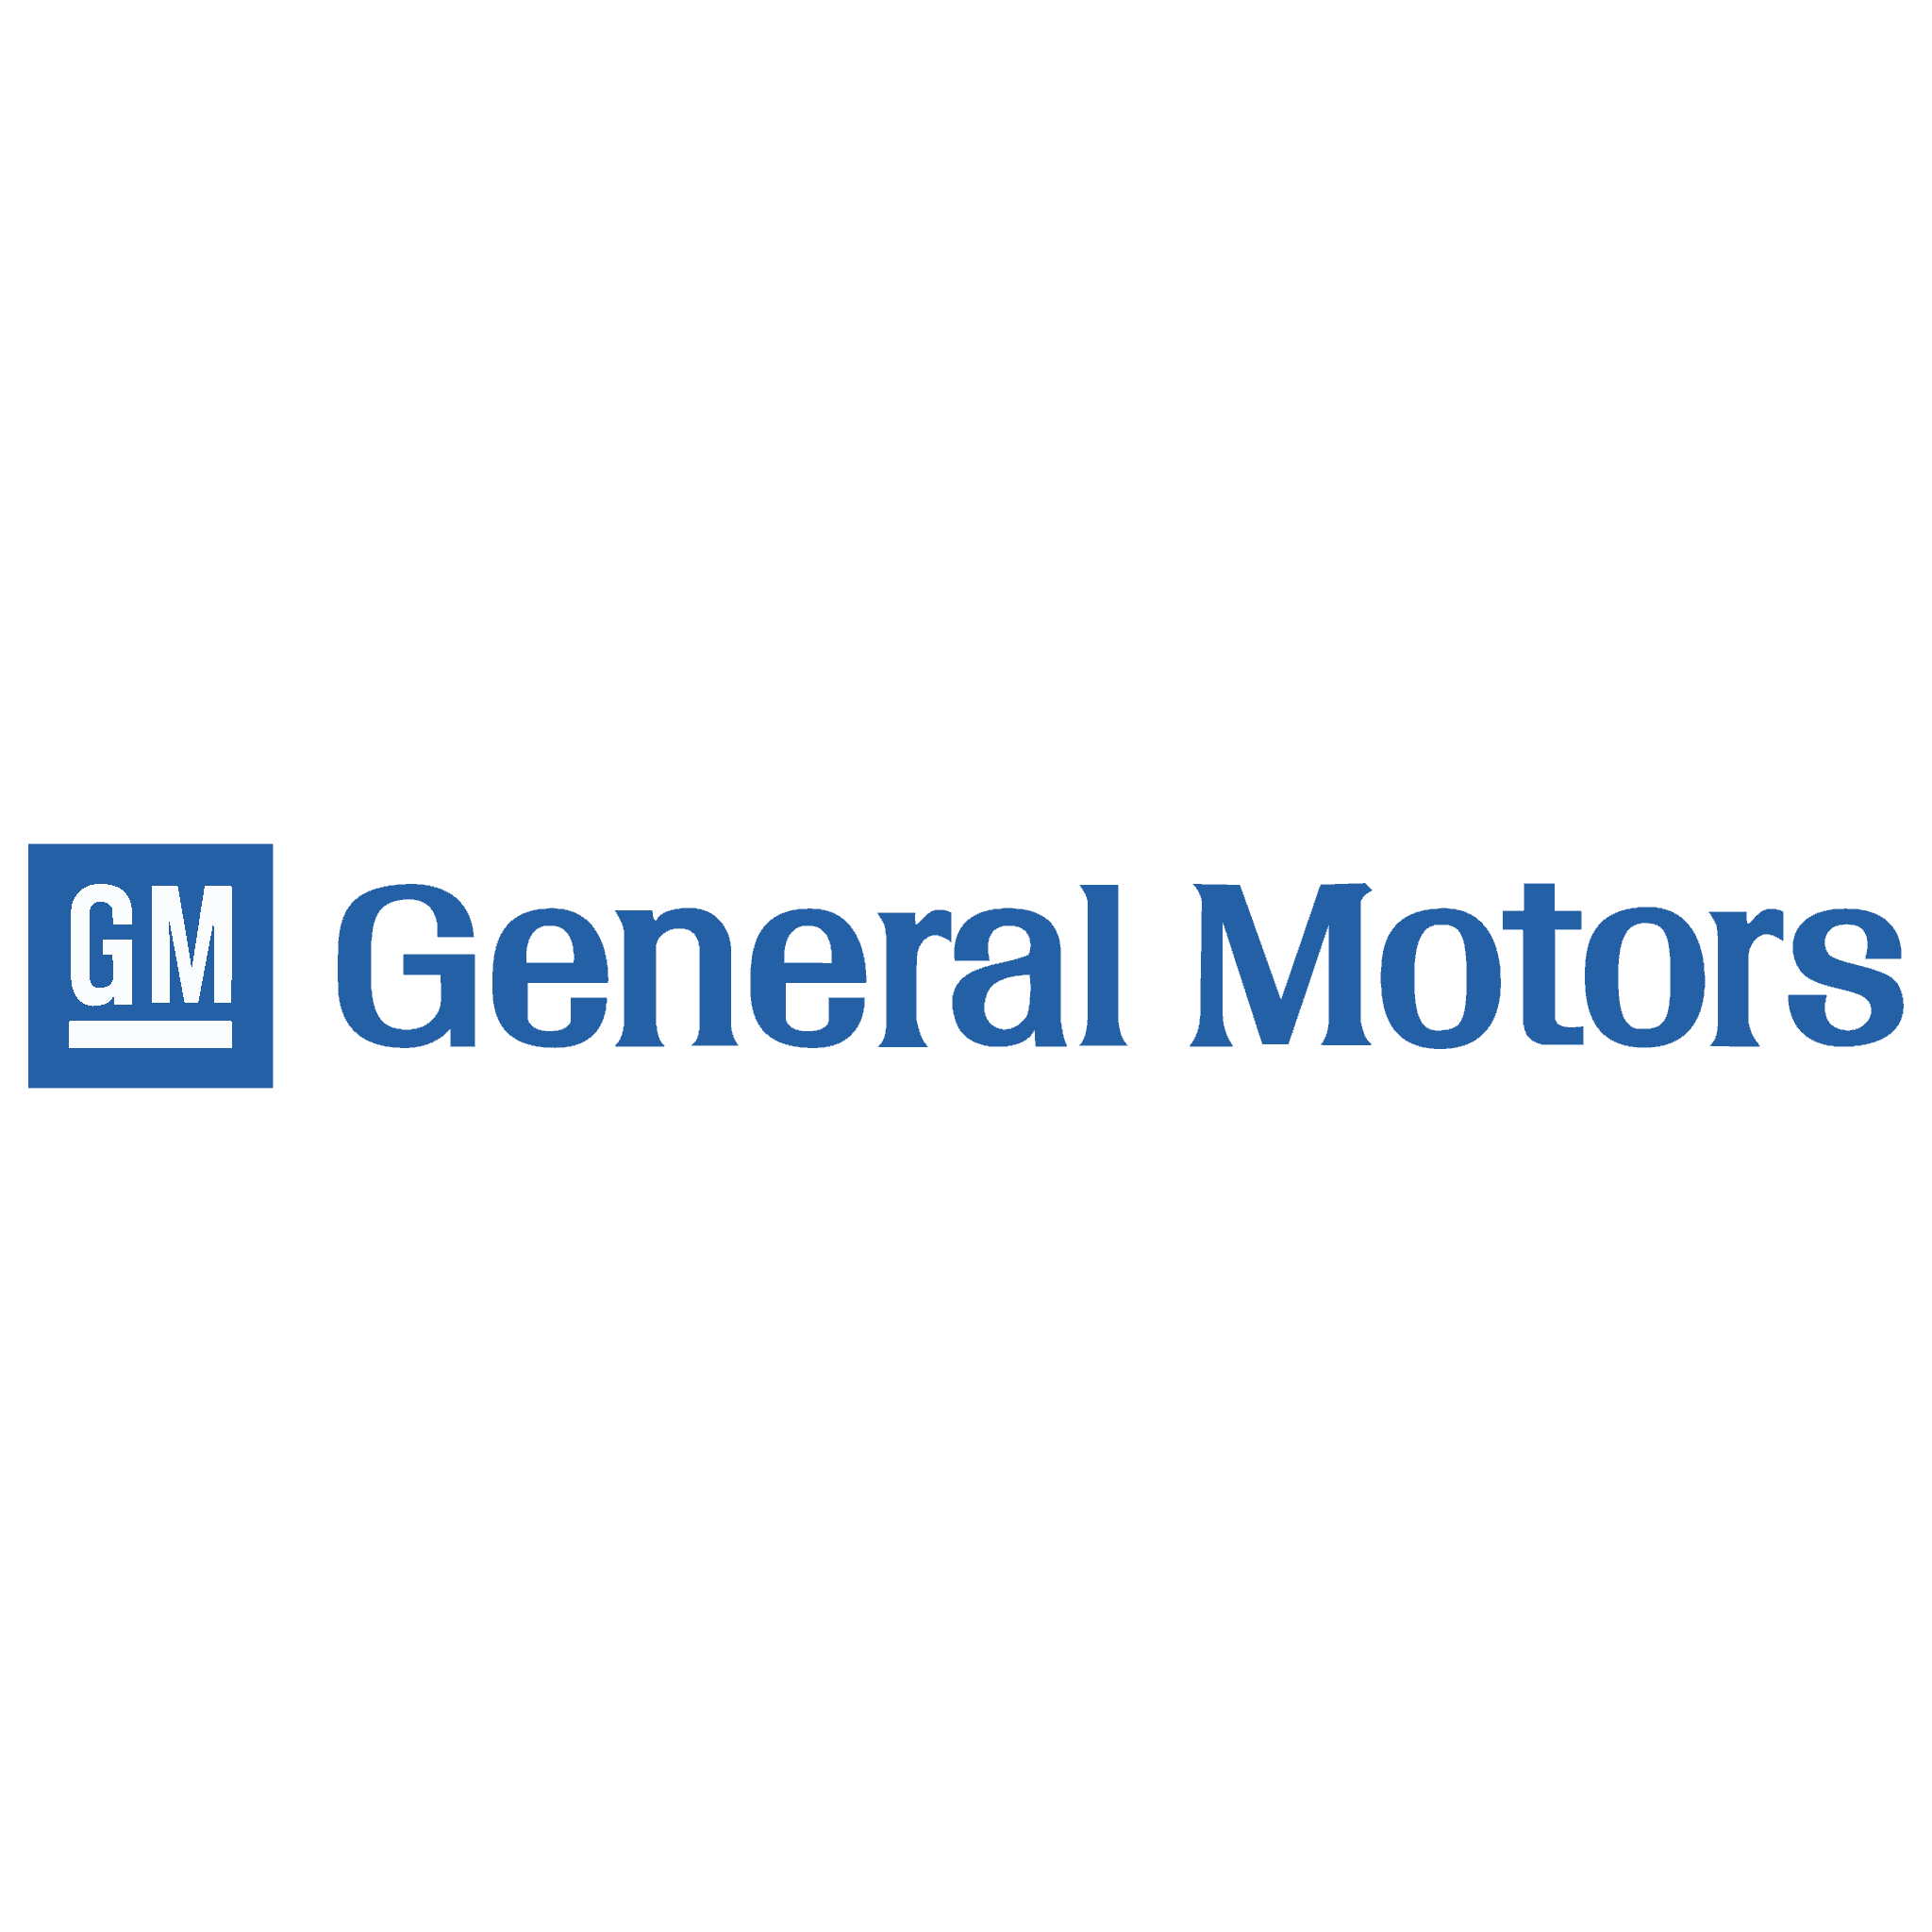 General Motors Wave Analysis – 1 May, 2020